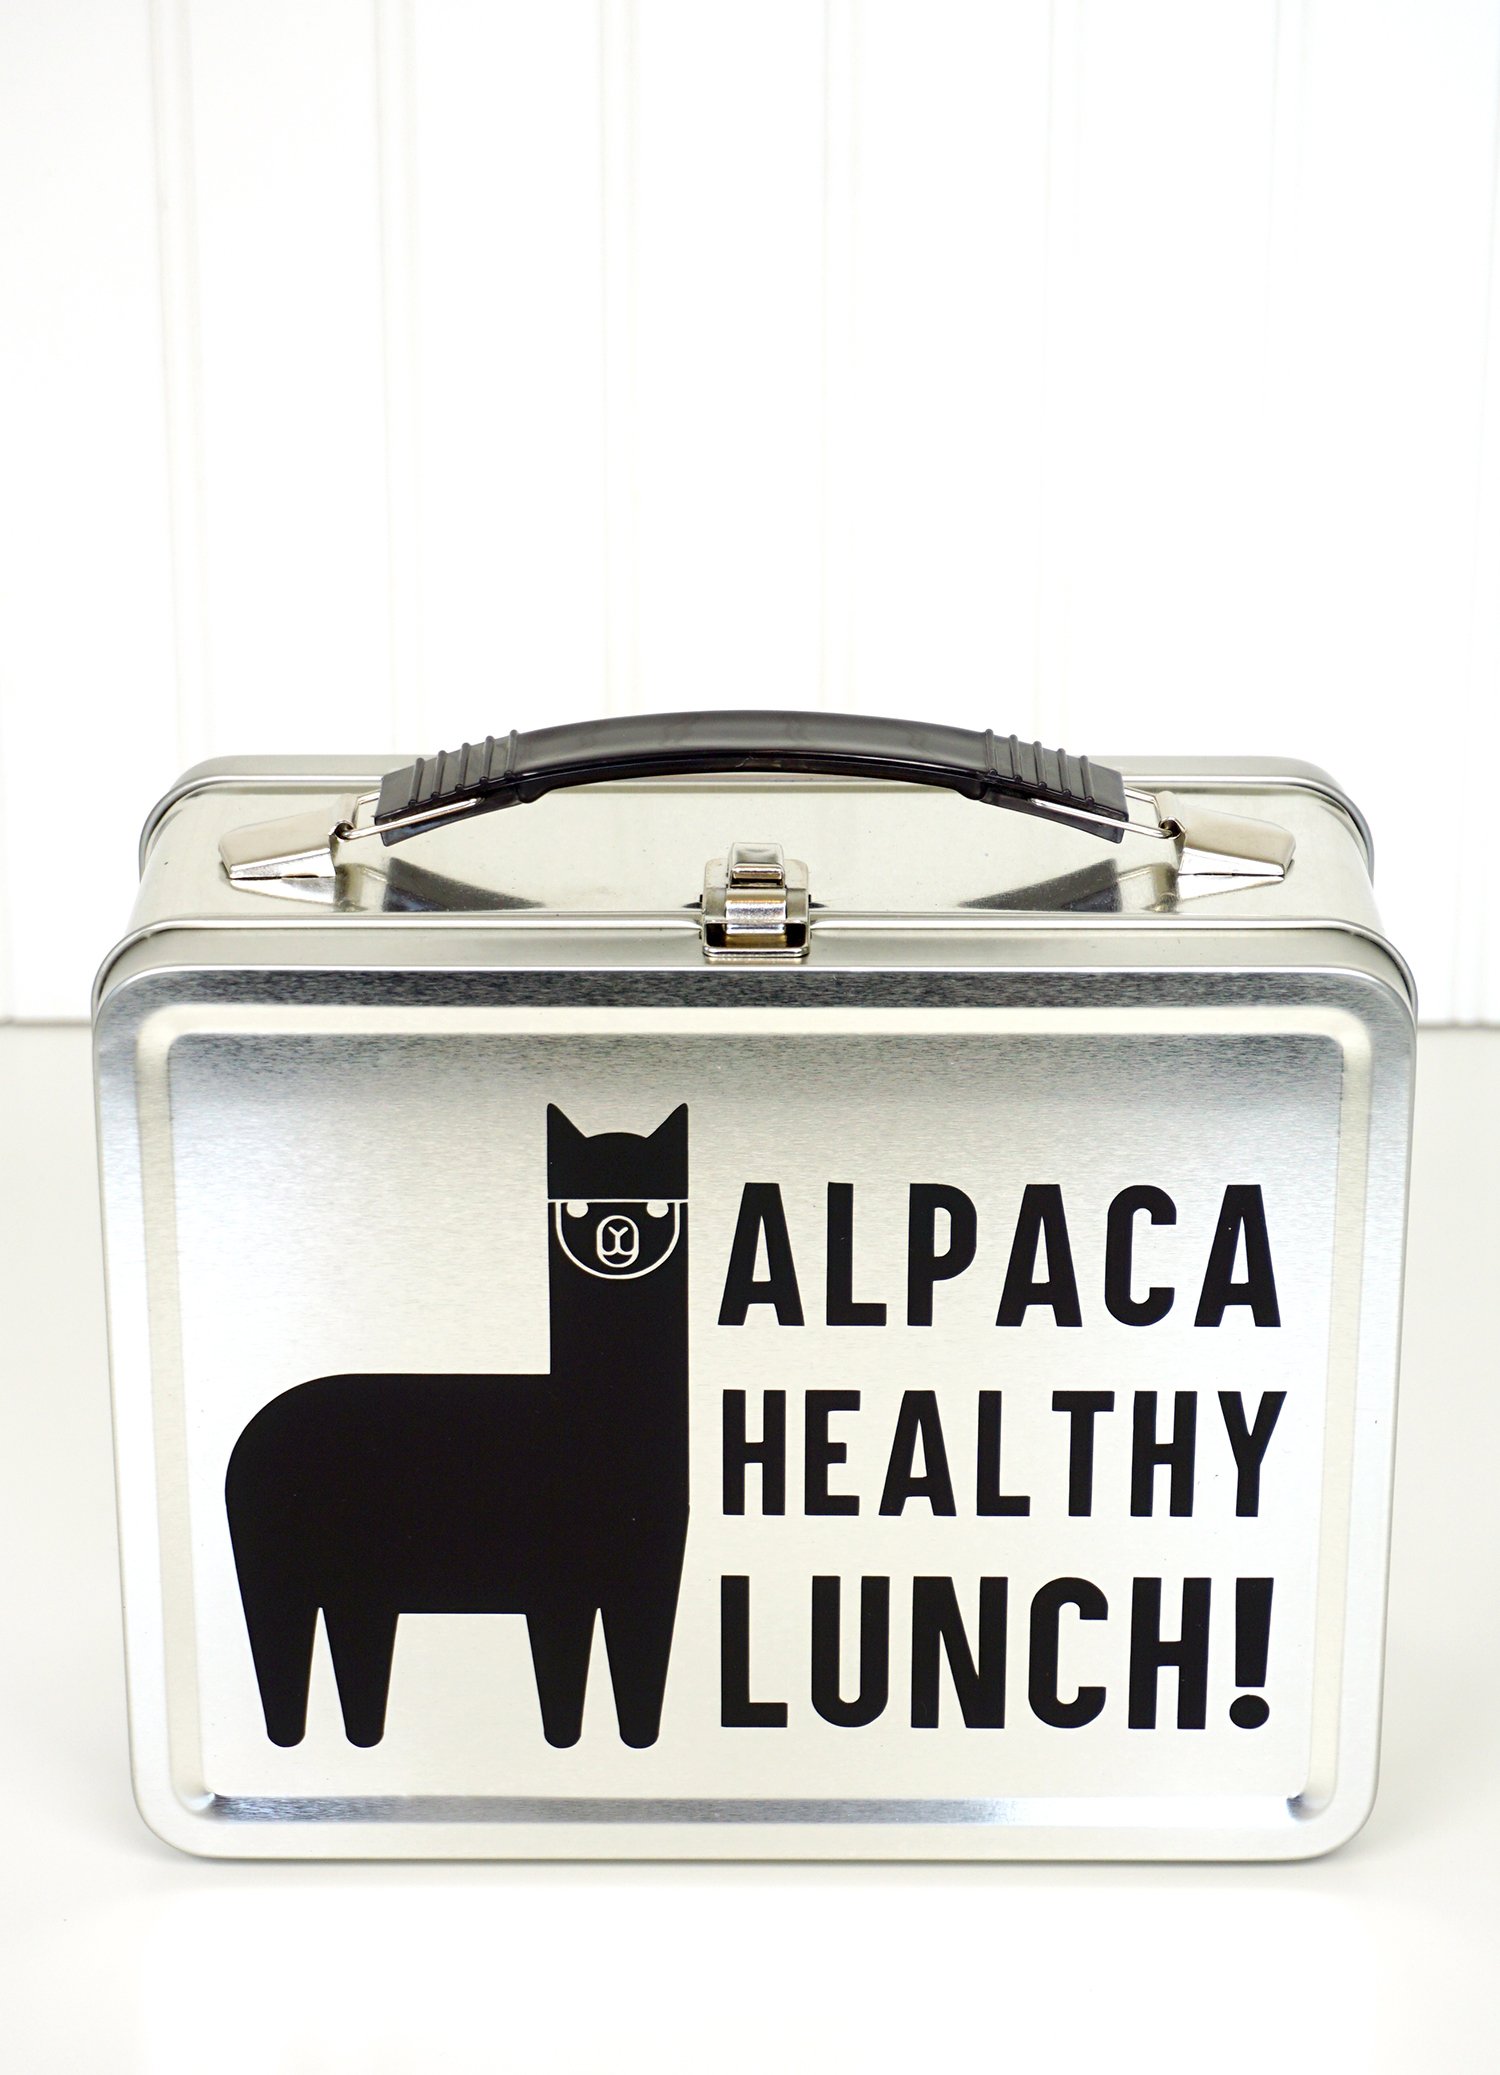 alpaca healthy lunch! design on metal lunch box